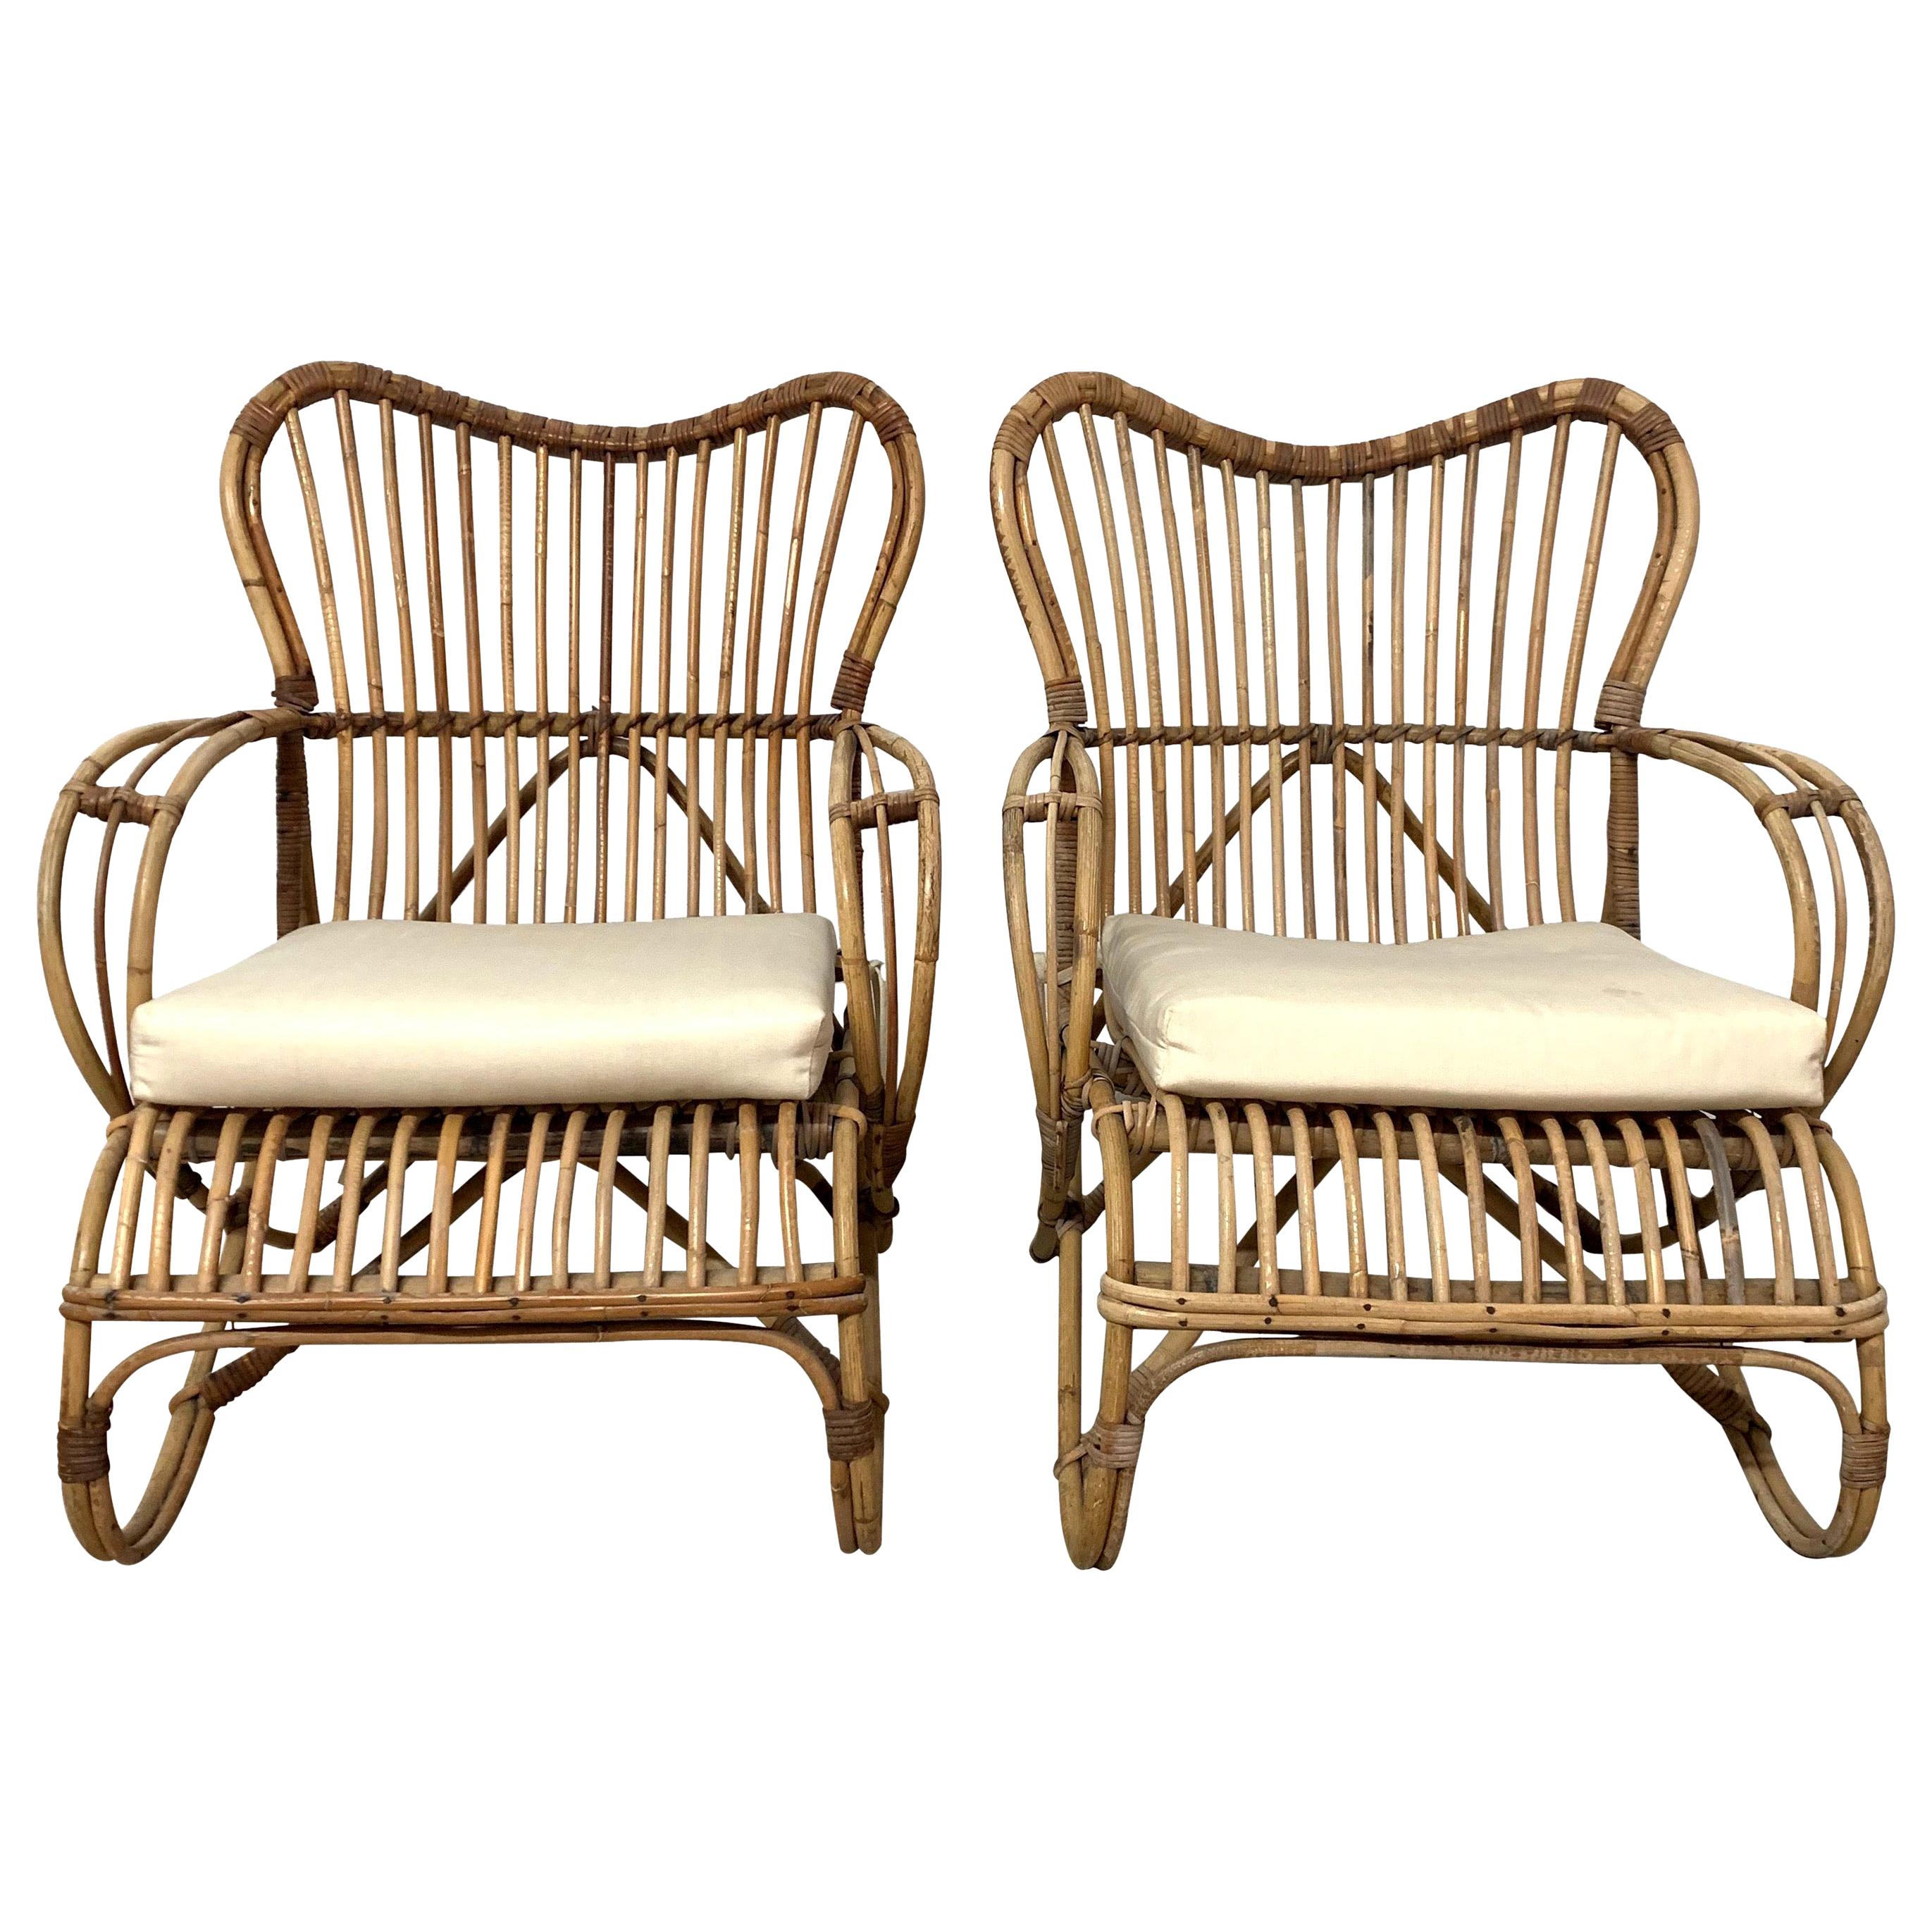 Pair of Mid-Century Modern Italian Rattan and Wicker Chairs